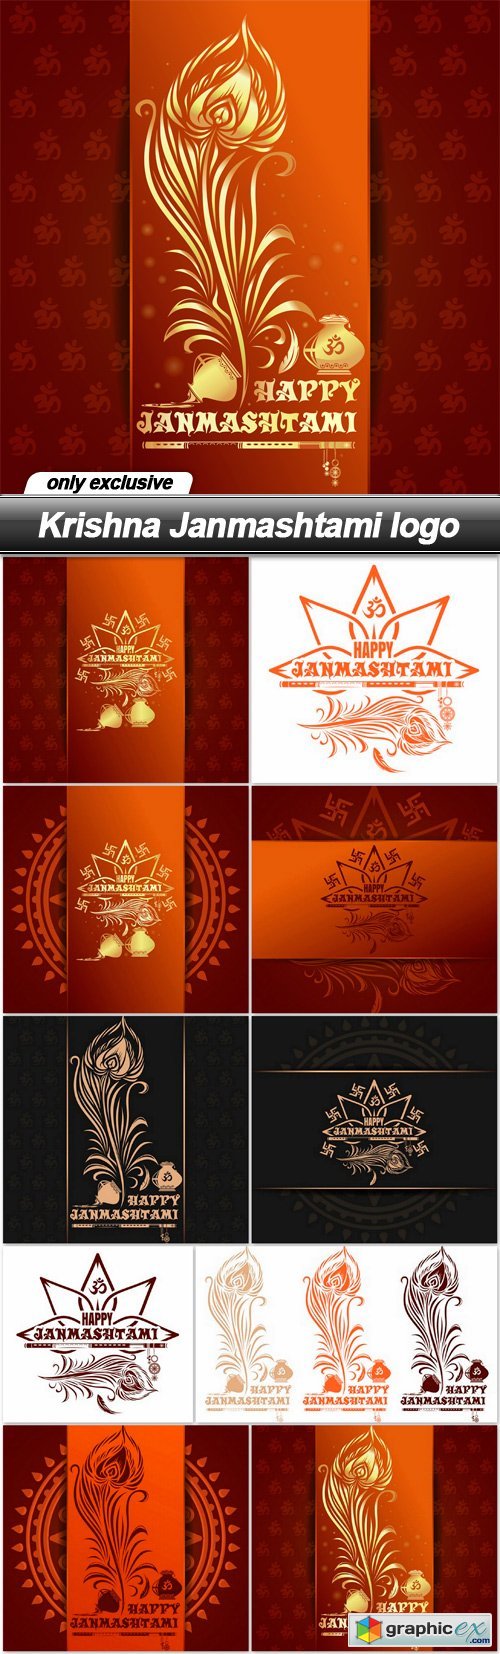 Krishna Janmashtami logo - 10 EPS